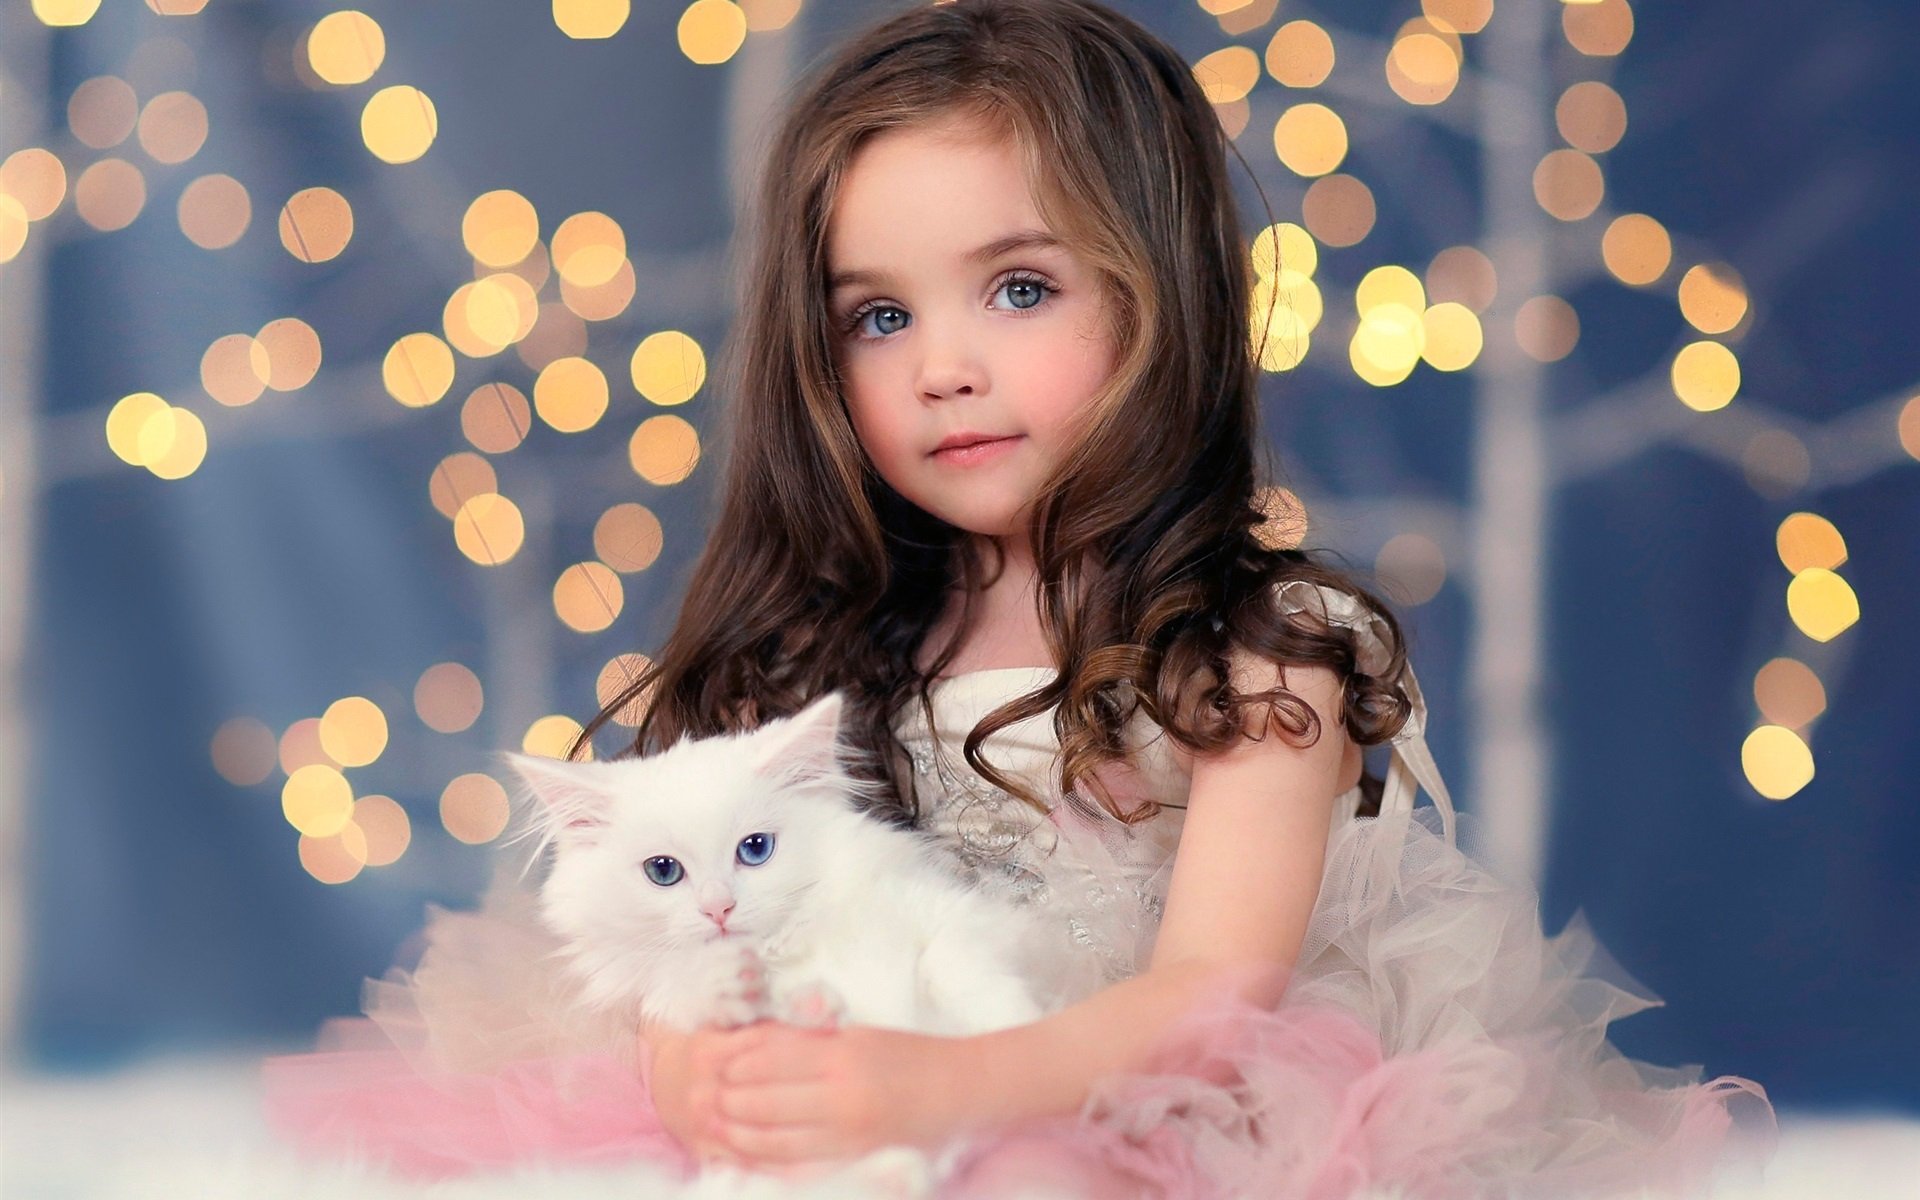 children Girl Blonde Blue Eyes Cat Animal Cute Dress